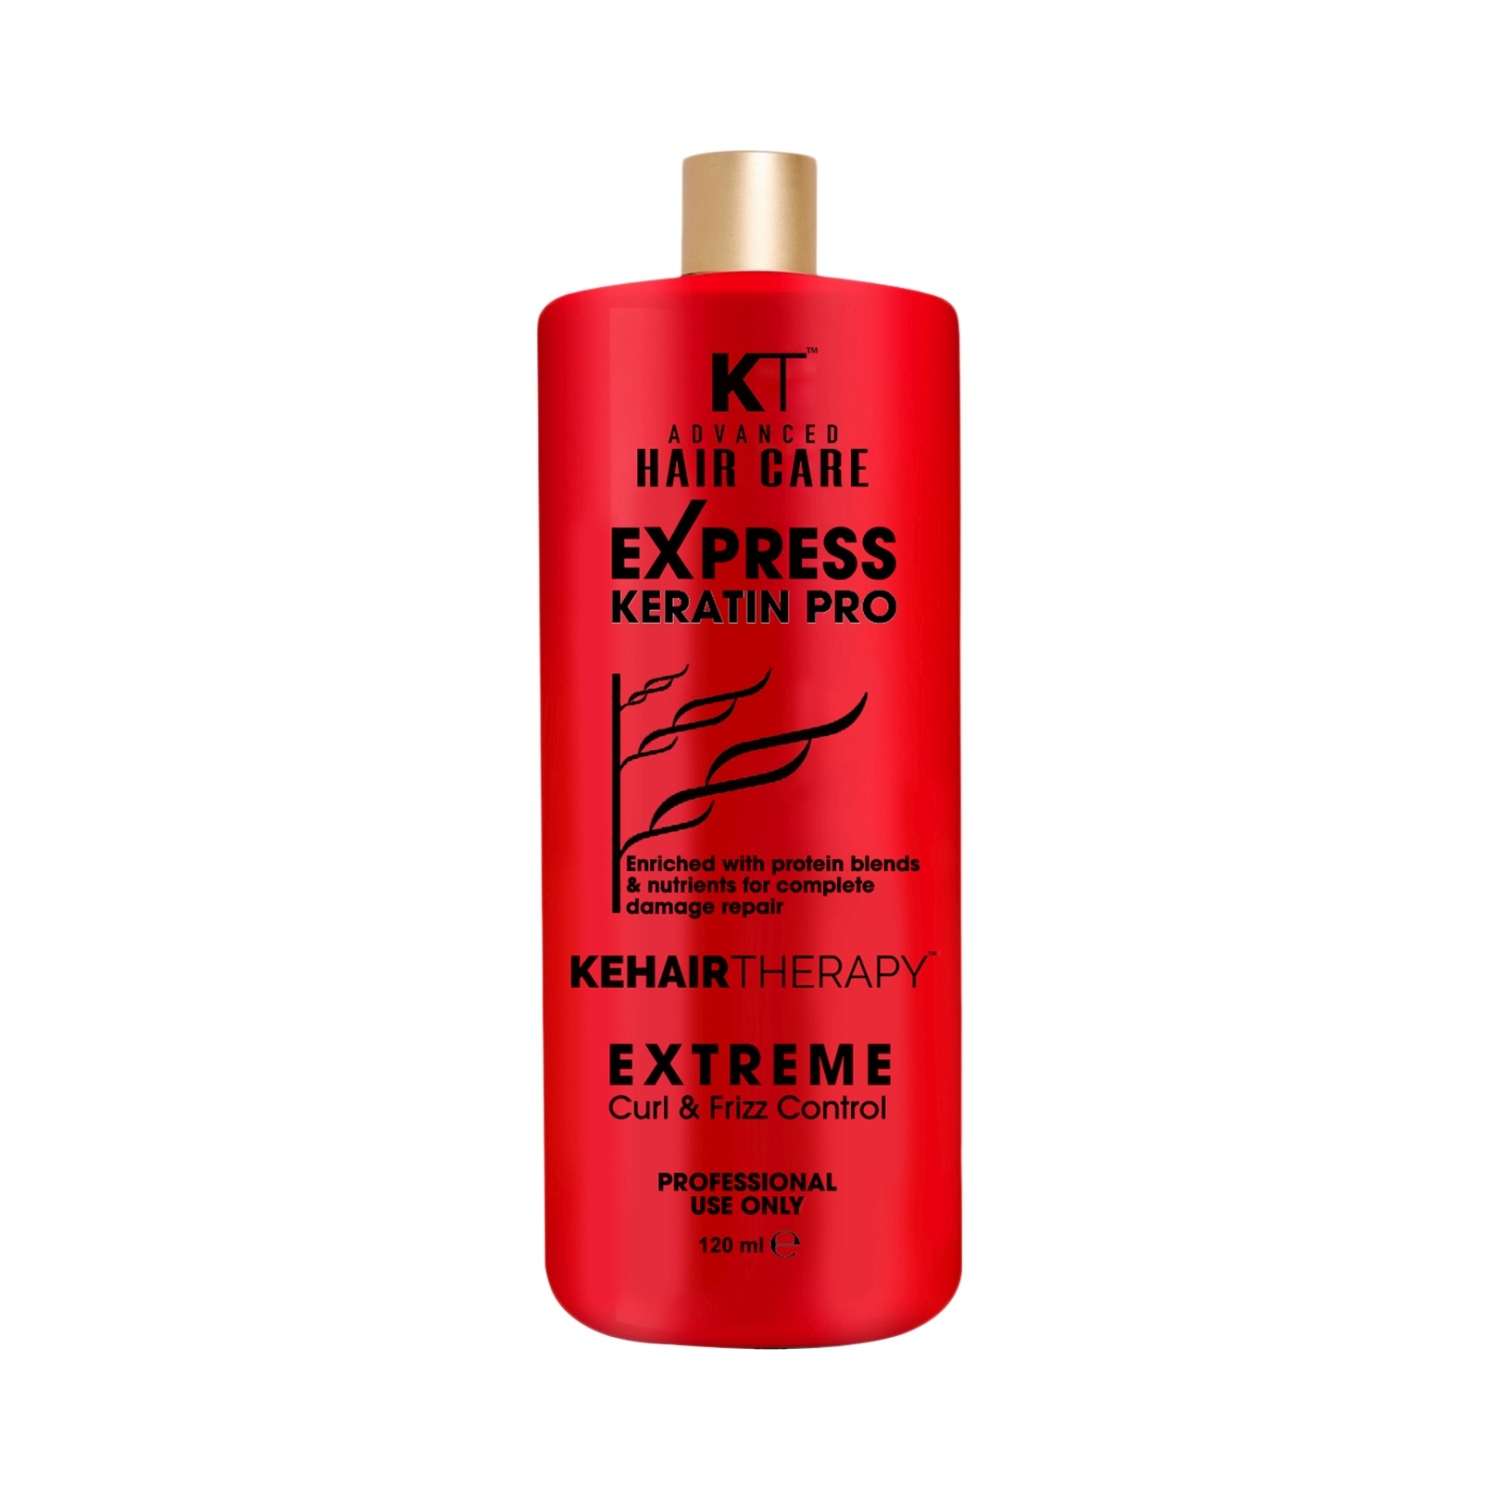 KT Professional | KT Professional Advanced Hair Care Express Keratin Pro Hair Treatment (120ml)